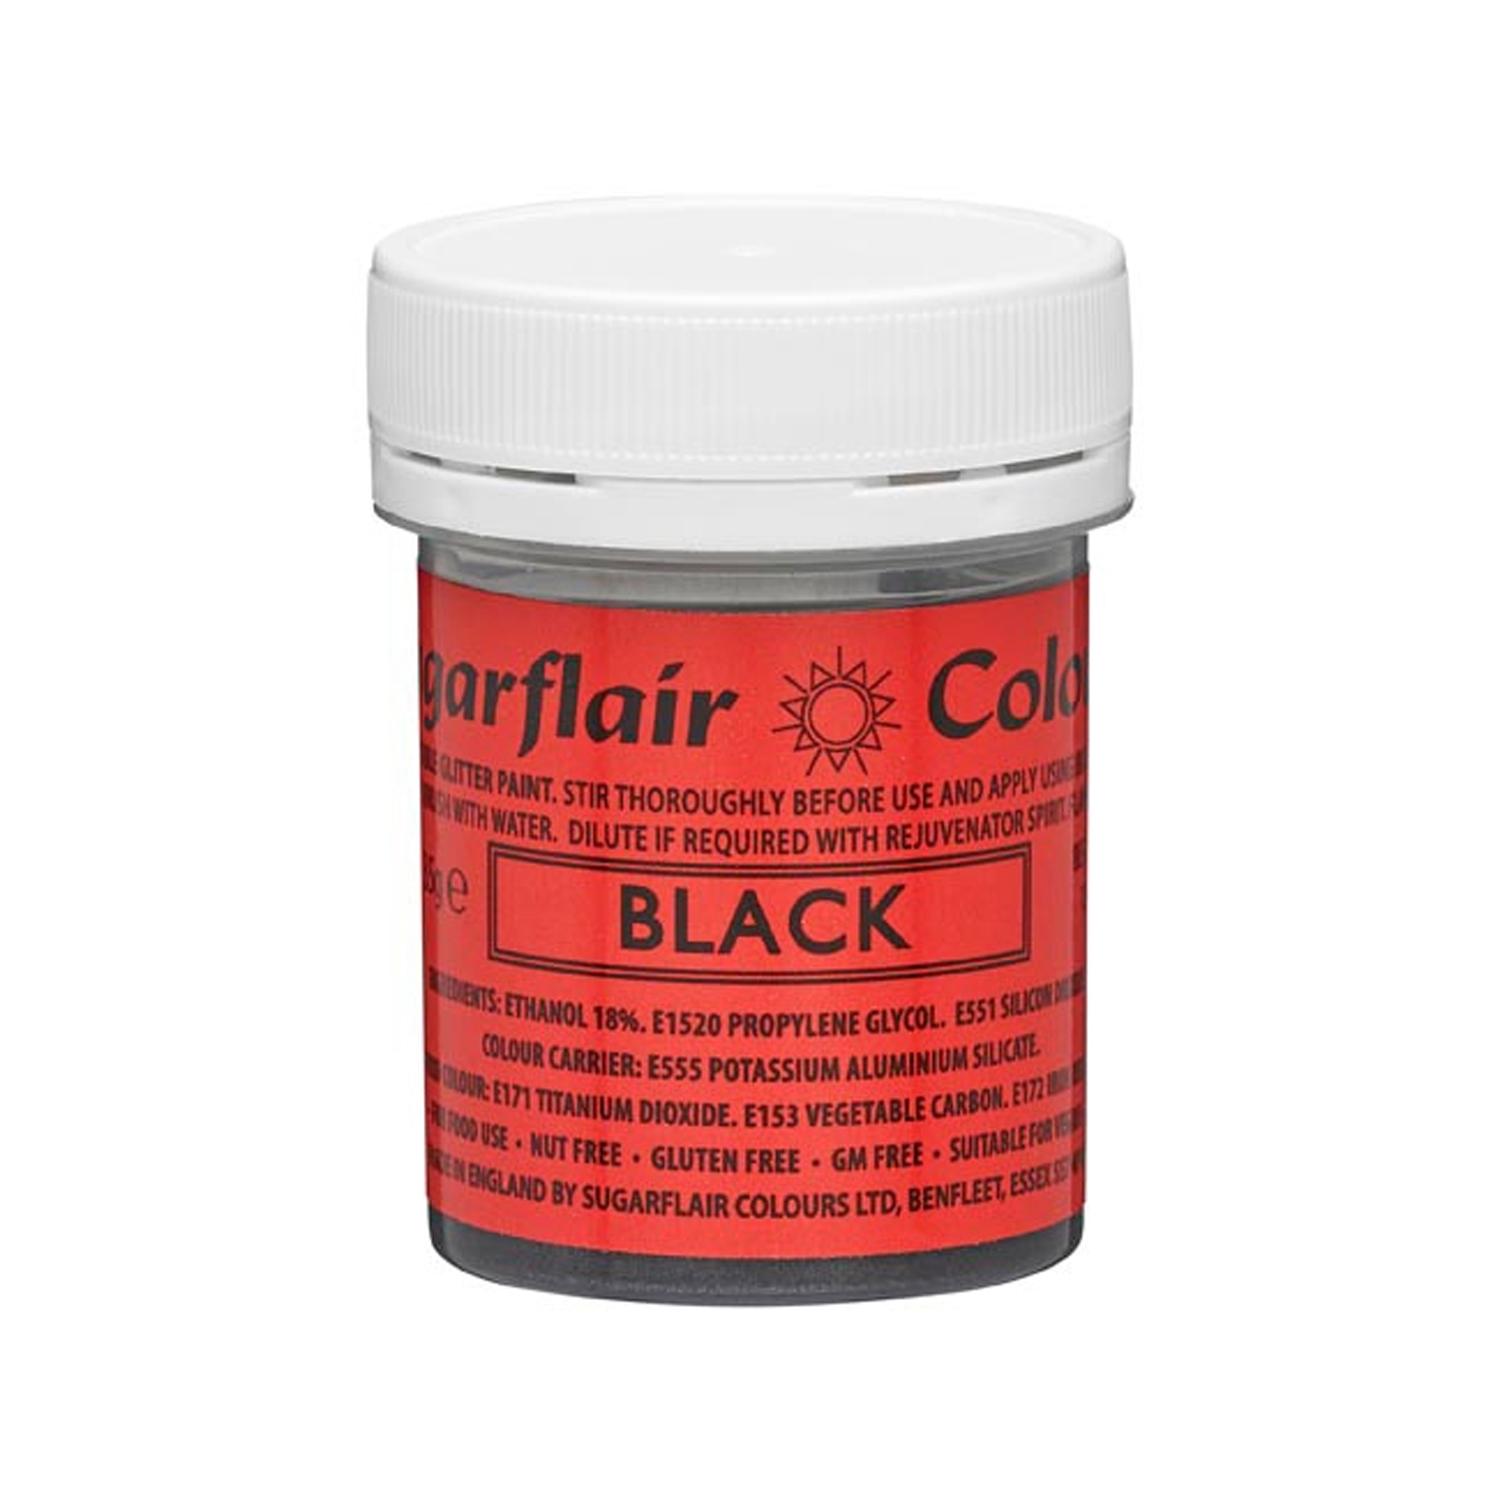 SUGARFLAIR BLACK EDIBLE GLITTER PAINT 35GMS